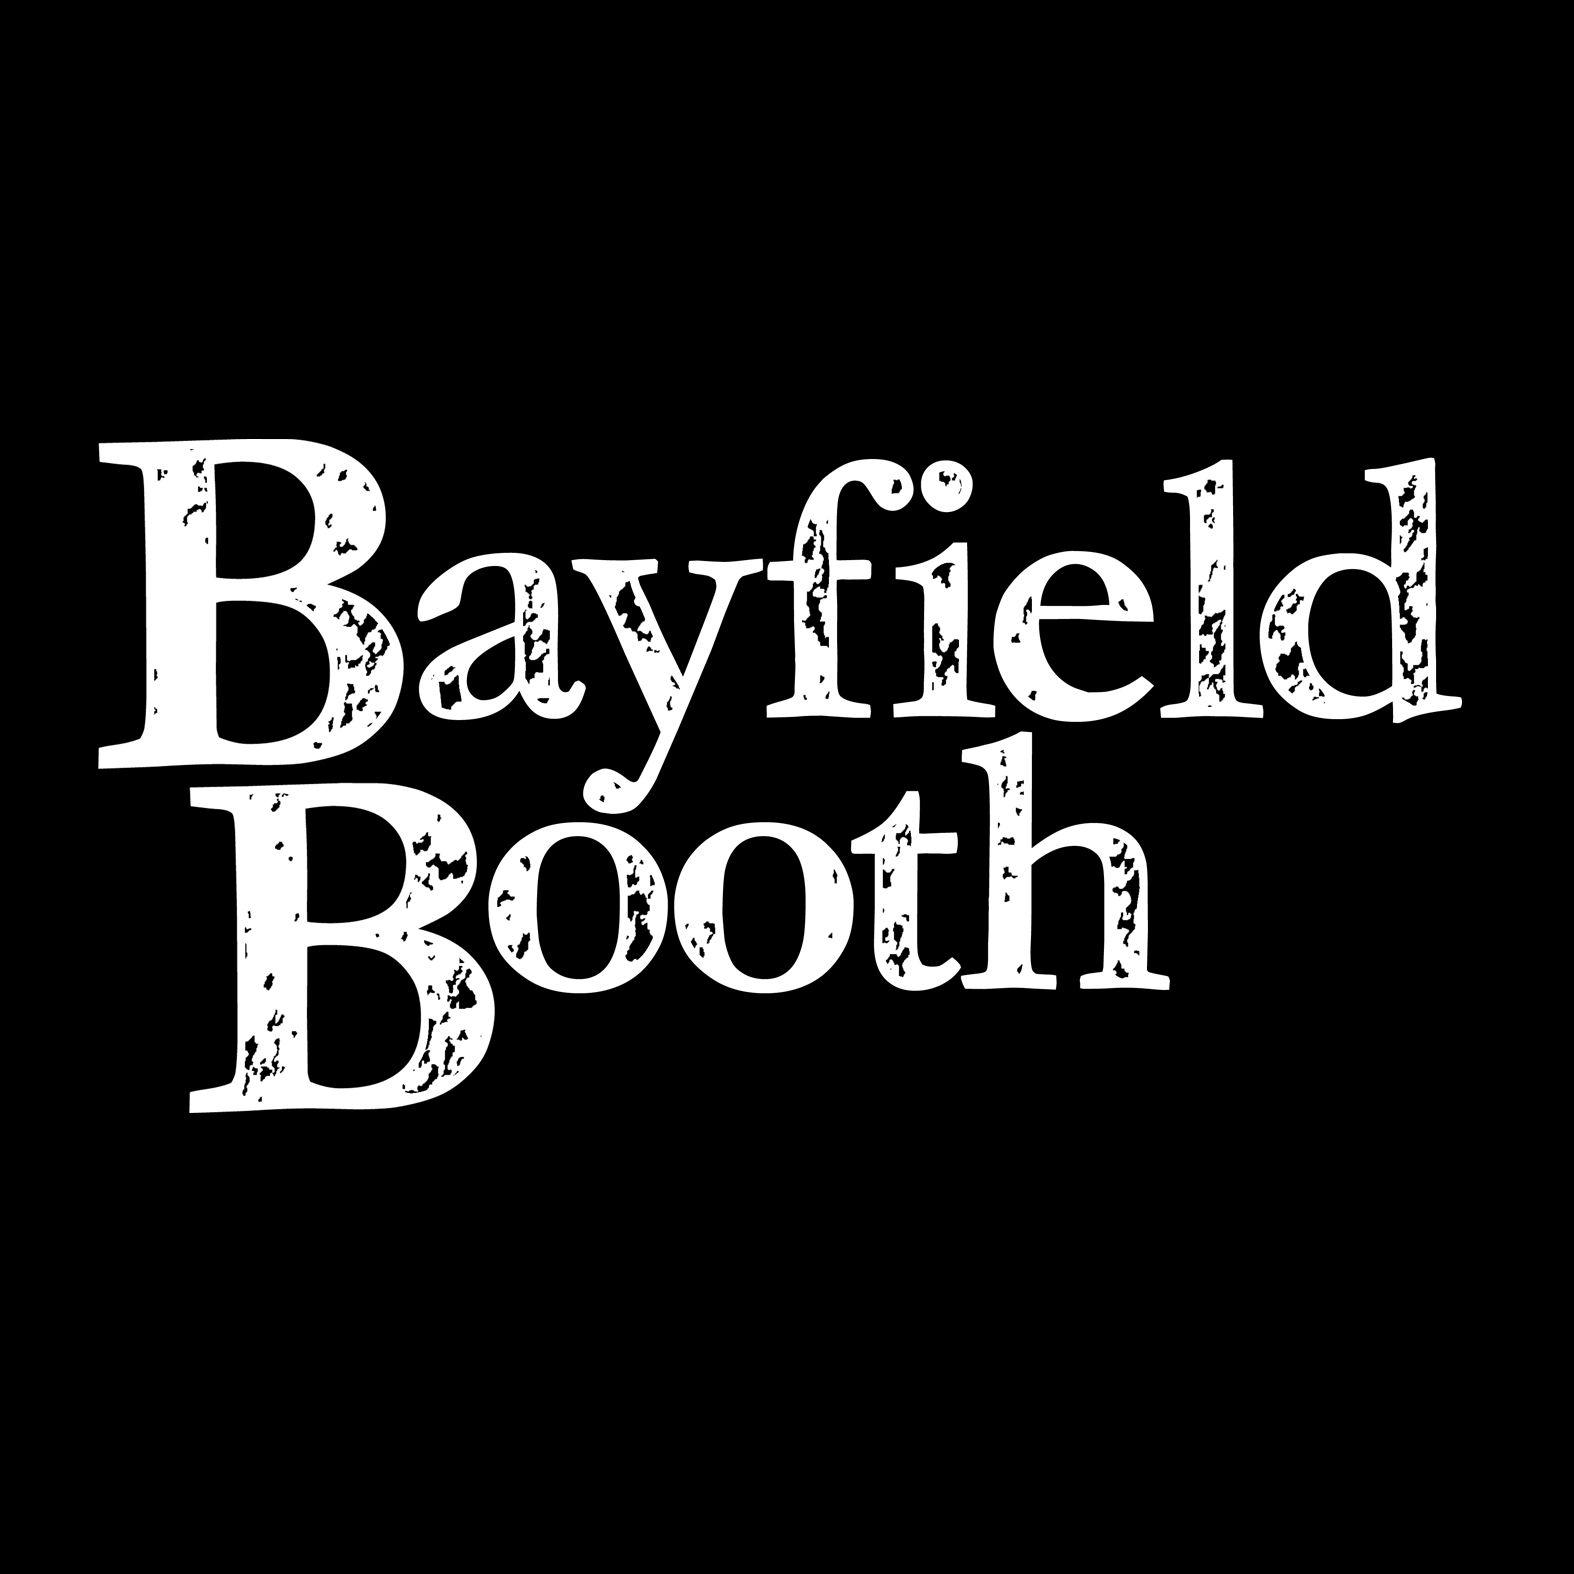 Black and White La Logo - Bayfield Booth logo black-white - The Recording BoothThe Recording Booth